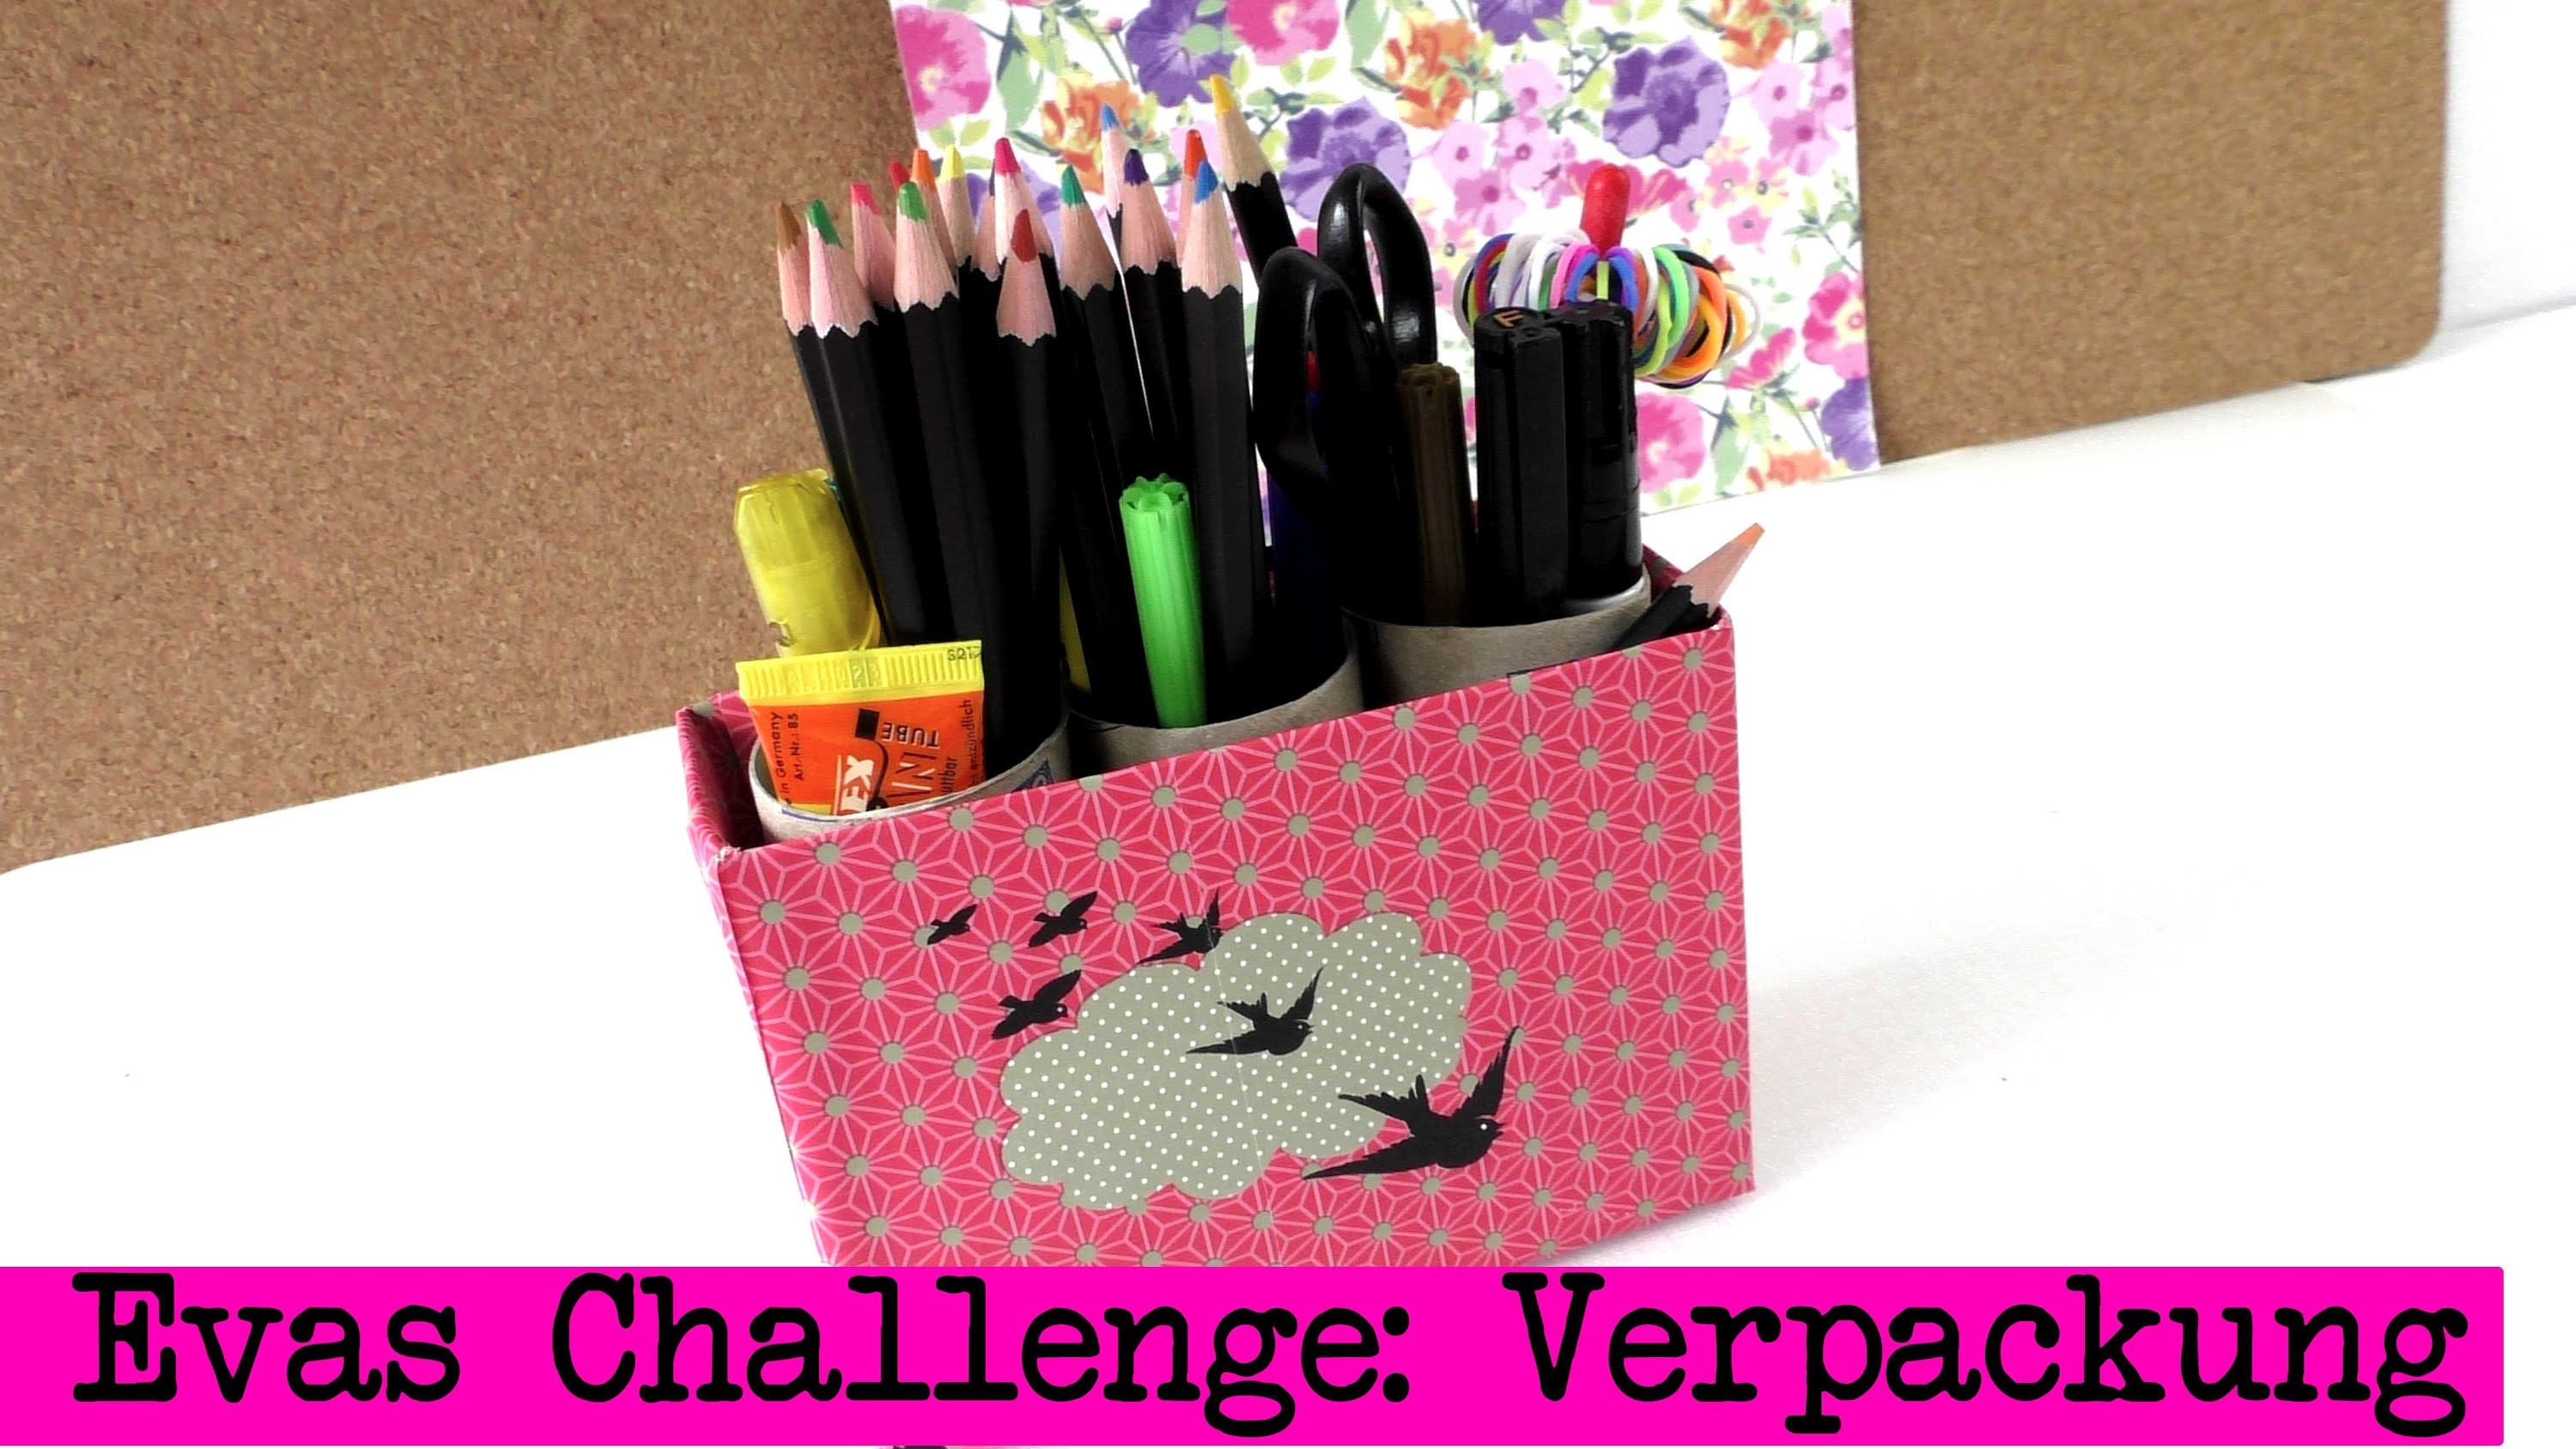 Diy Inspiration Challenge 12 Verpackung Evas Und Kathis Challenge Do It Yourself Tutorial 7890